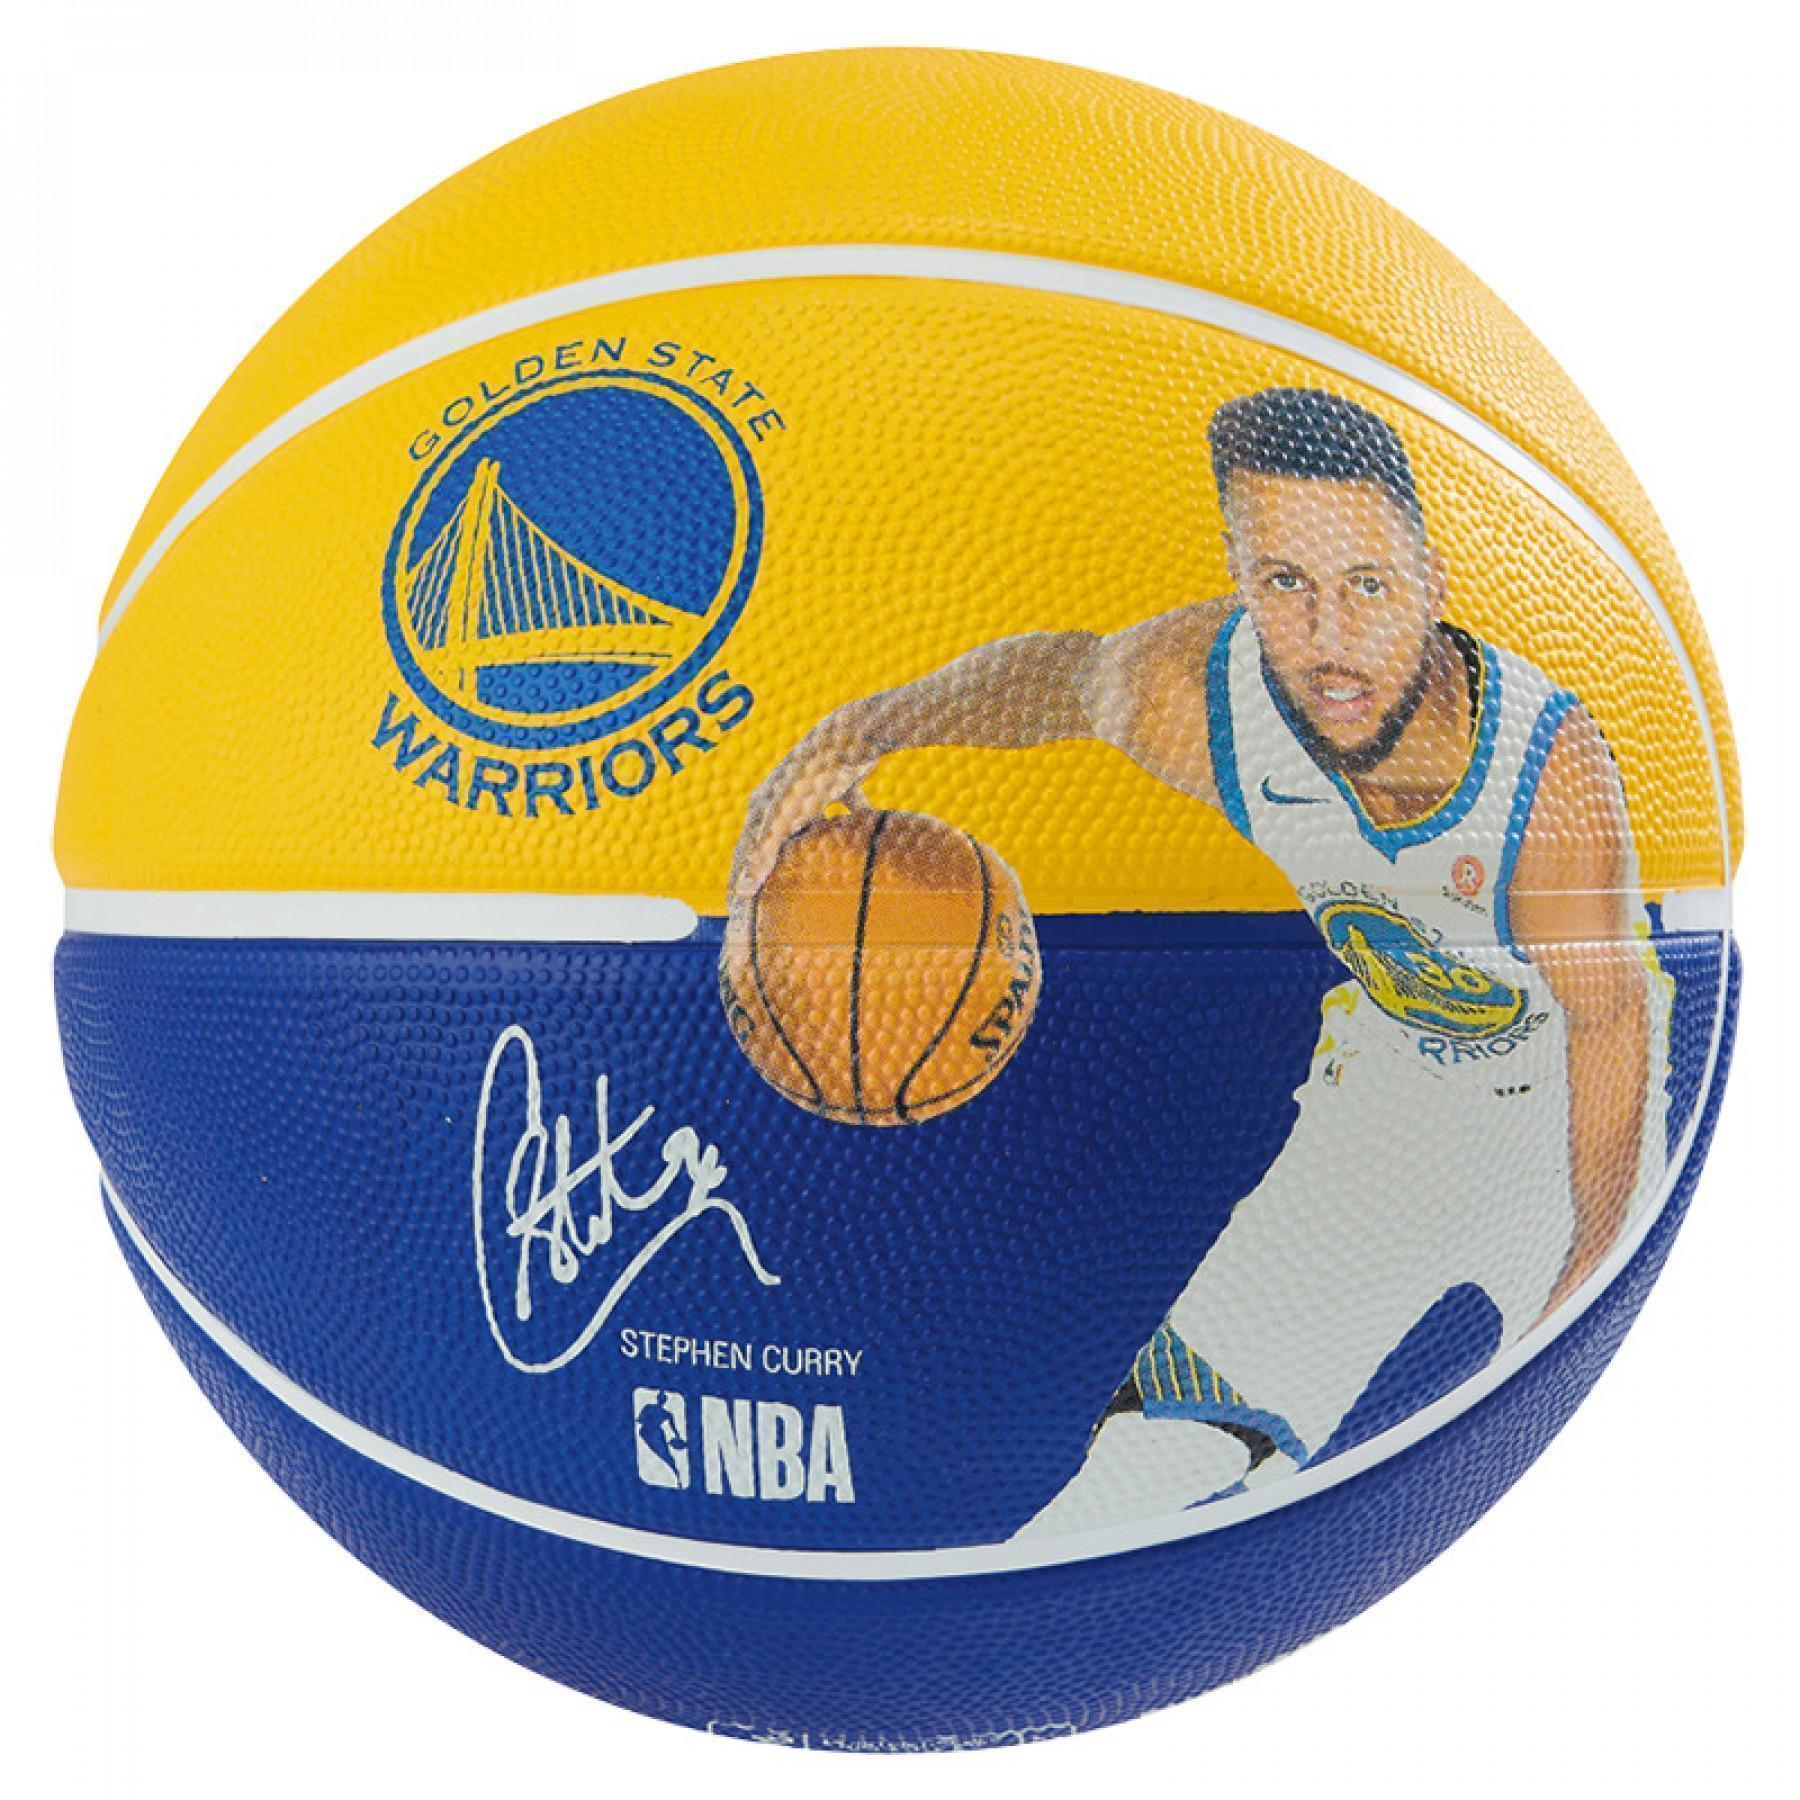 Balão Spalding NBA Player Stephen Curry (83-866z)